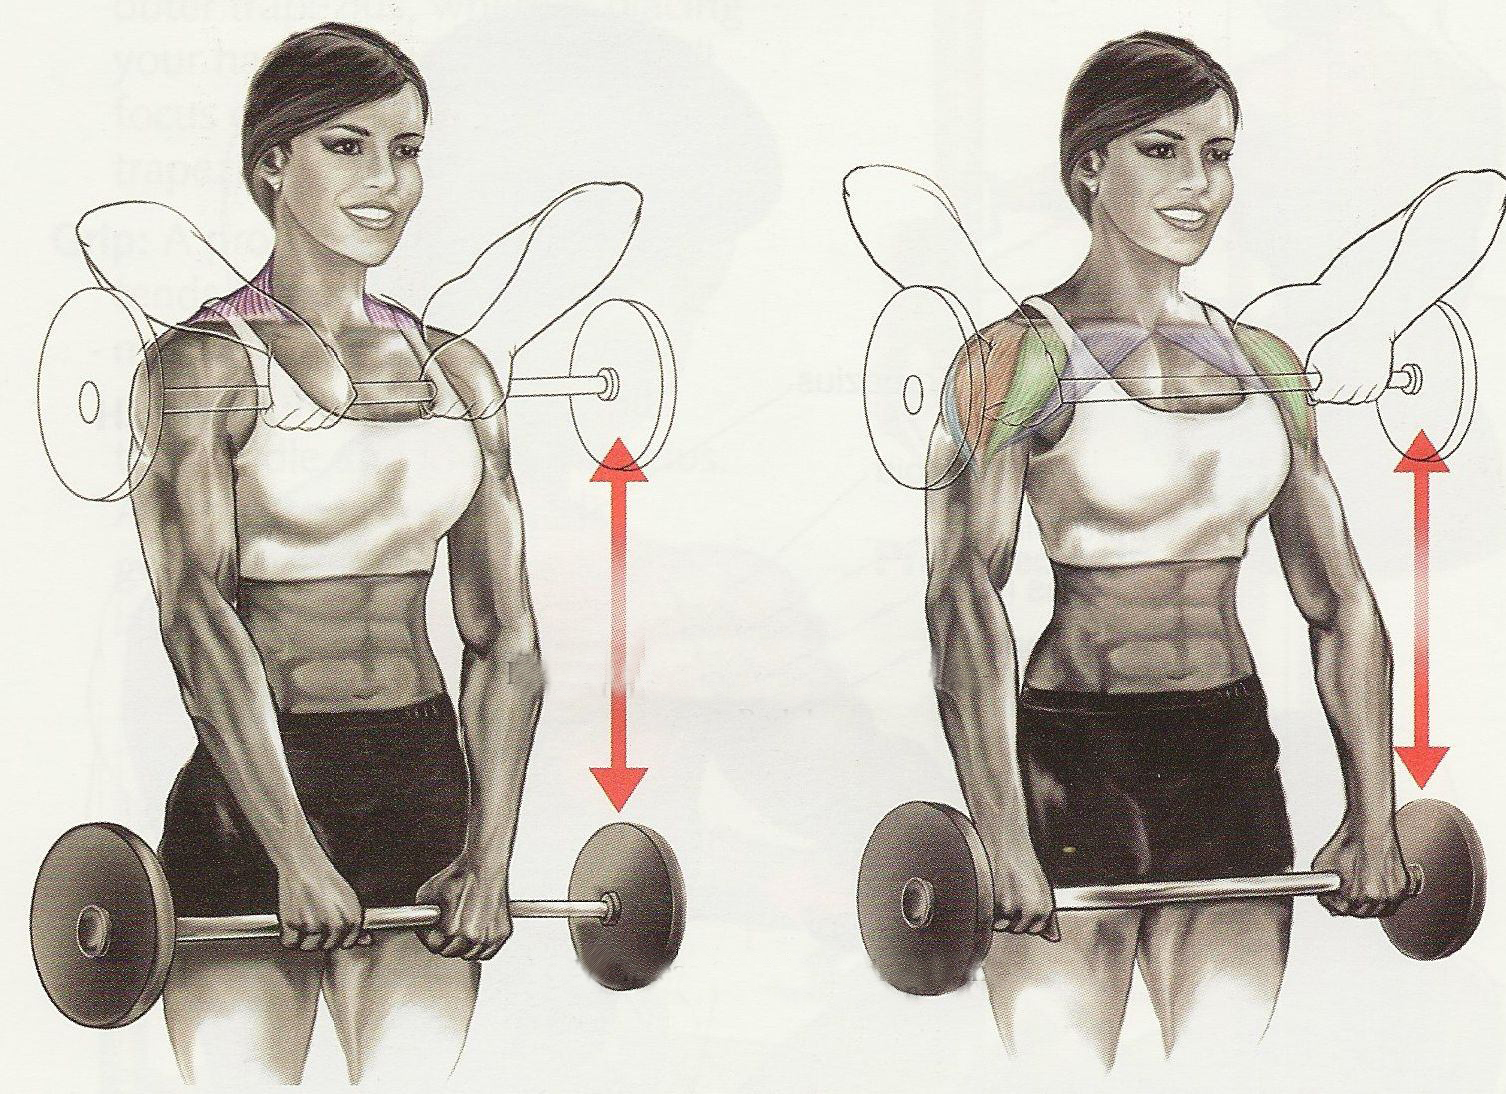 Shoulder Workout Anatomy